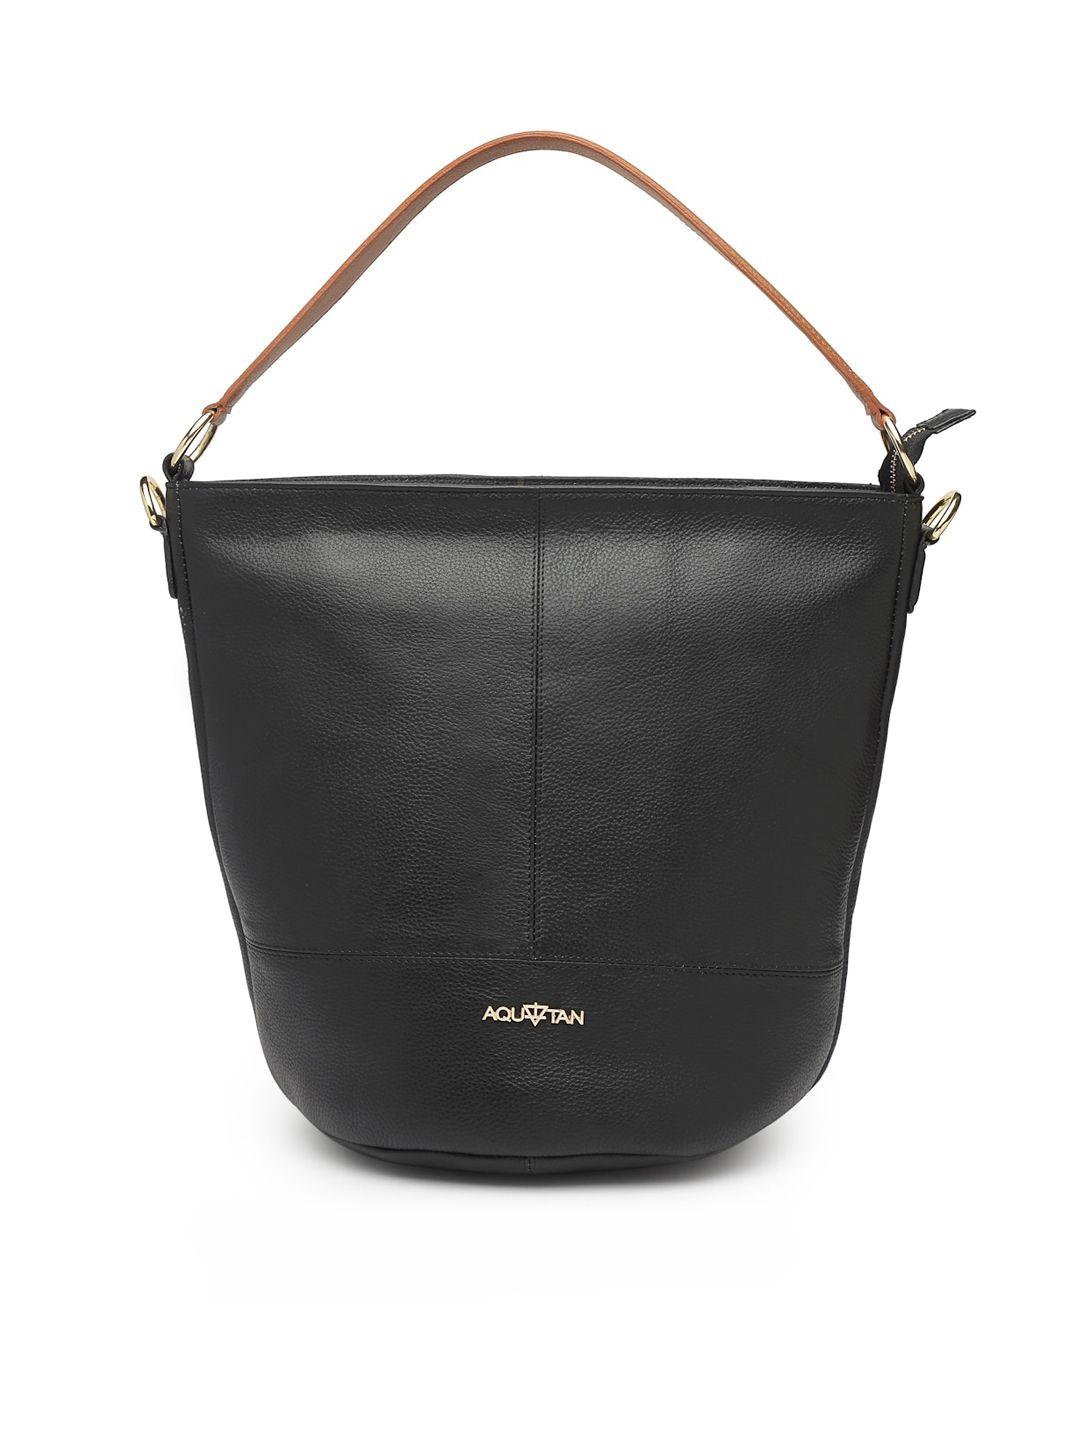 aquatan leather structured hobo bag